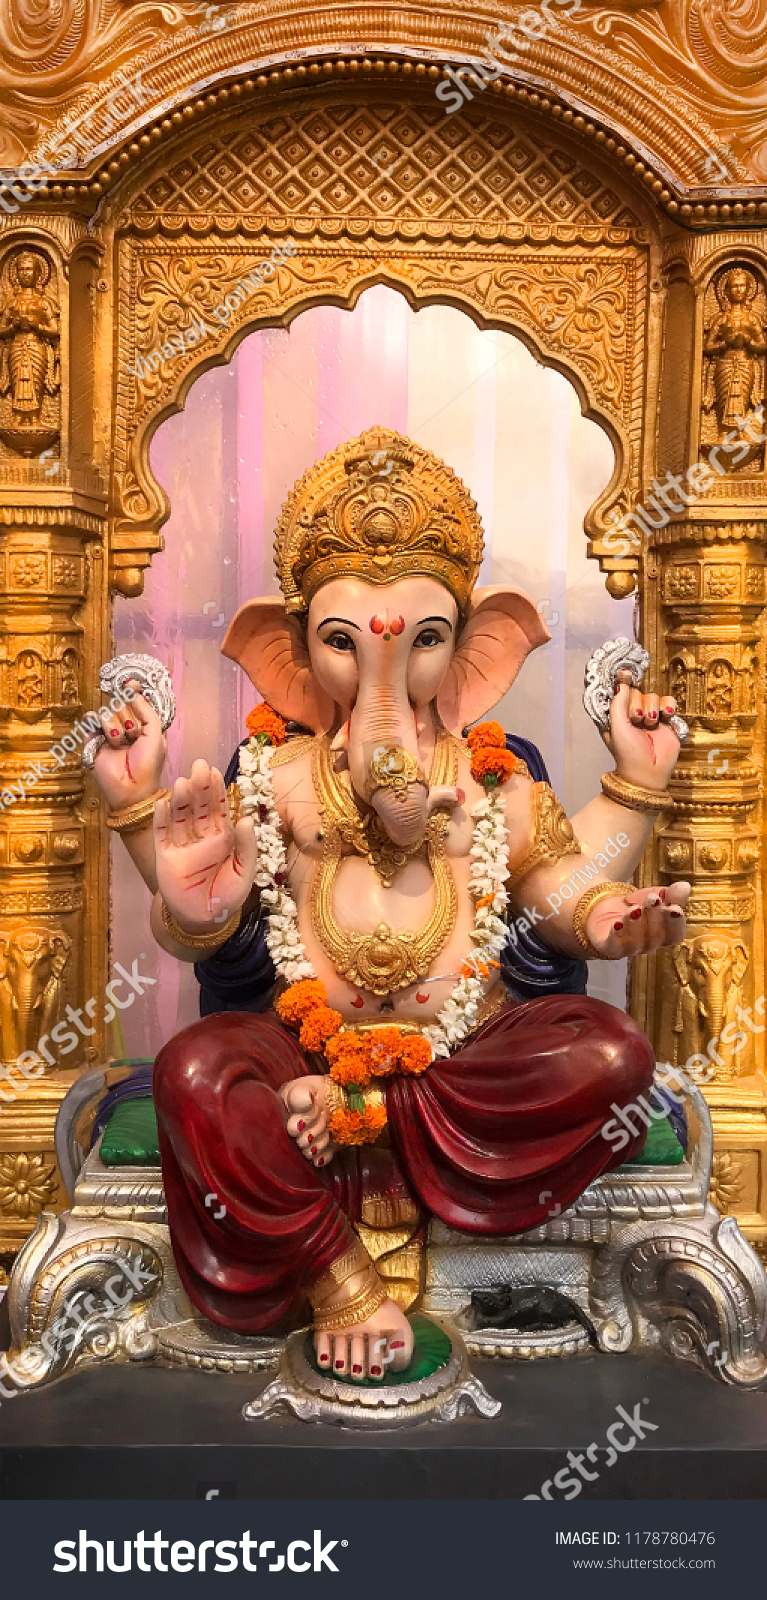 Ganpati Bappa Indian Festive Hindu God Stock Photo 1178780476 ...